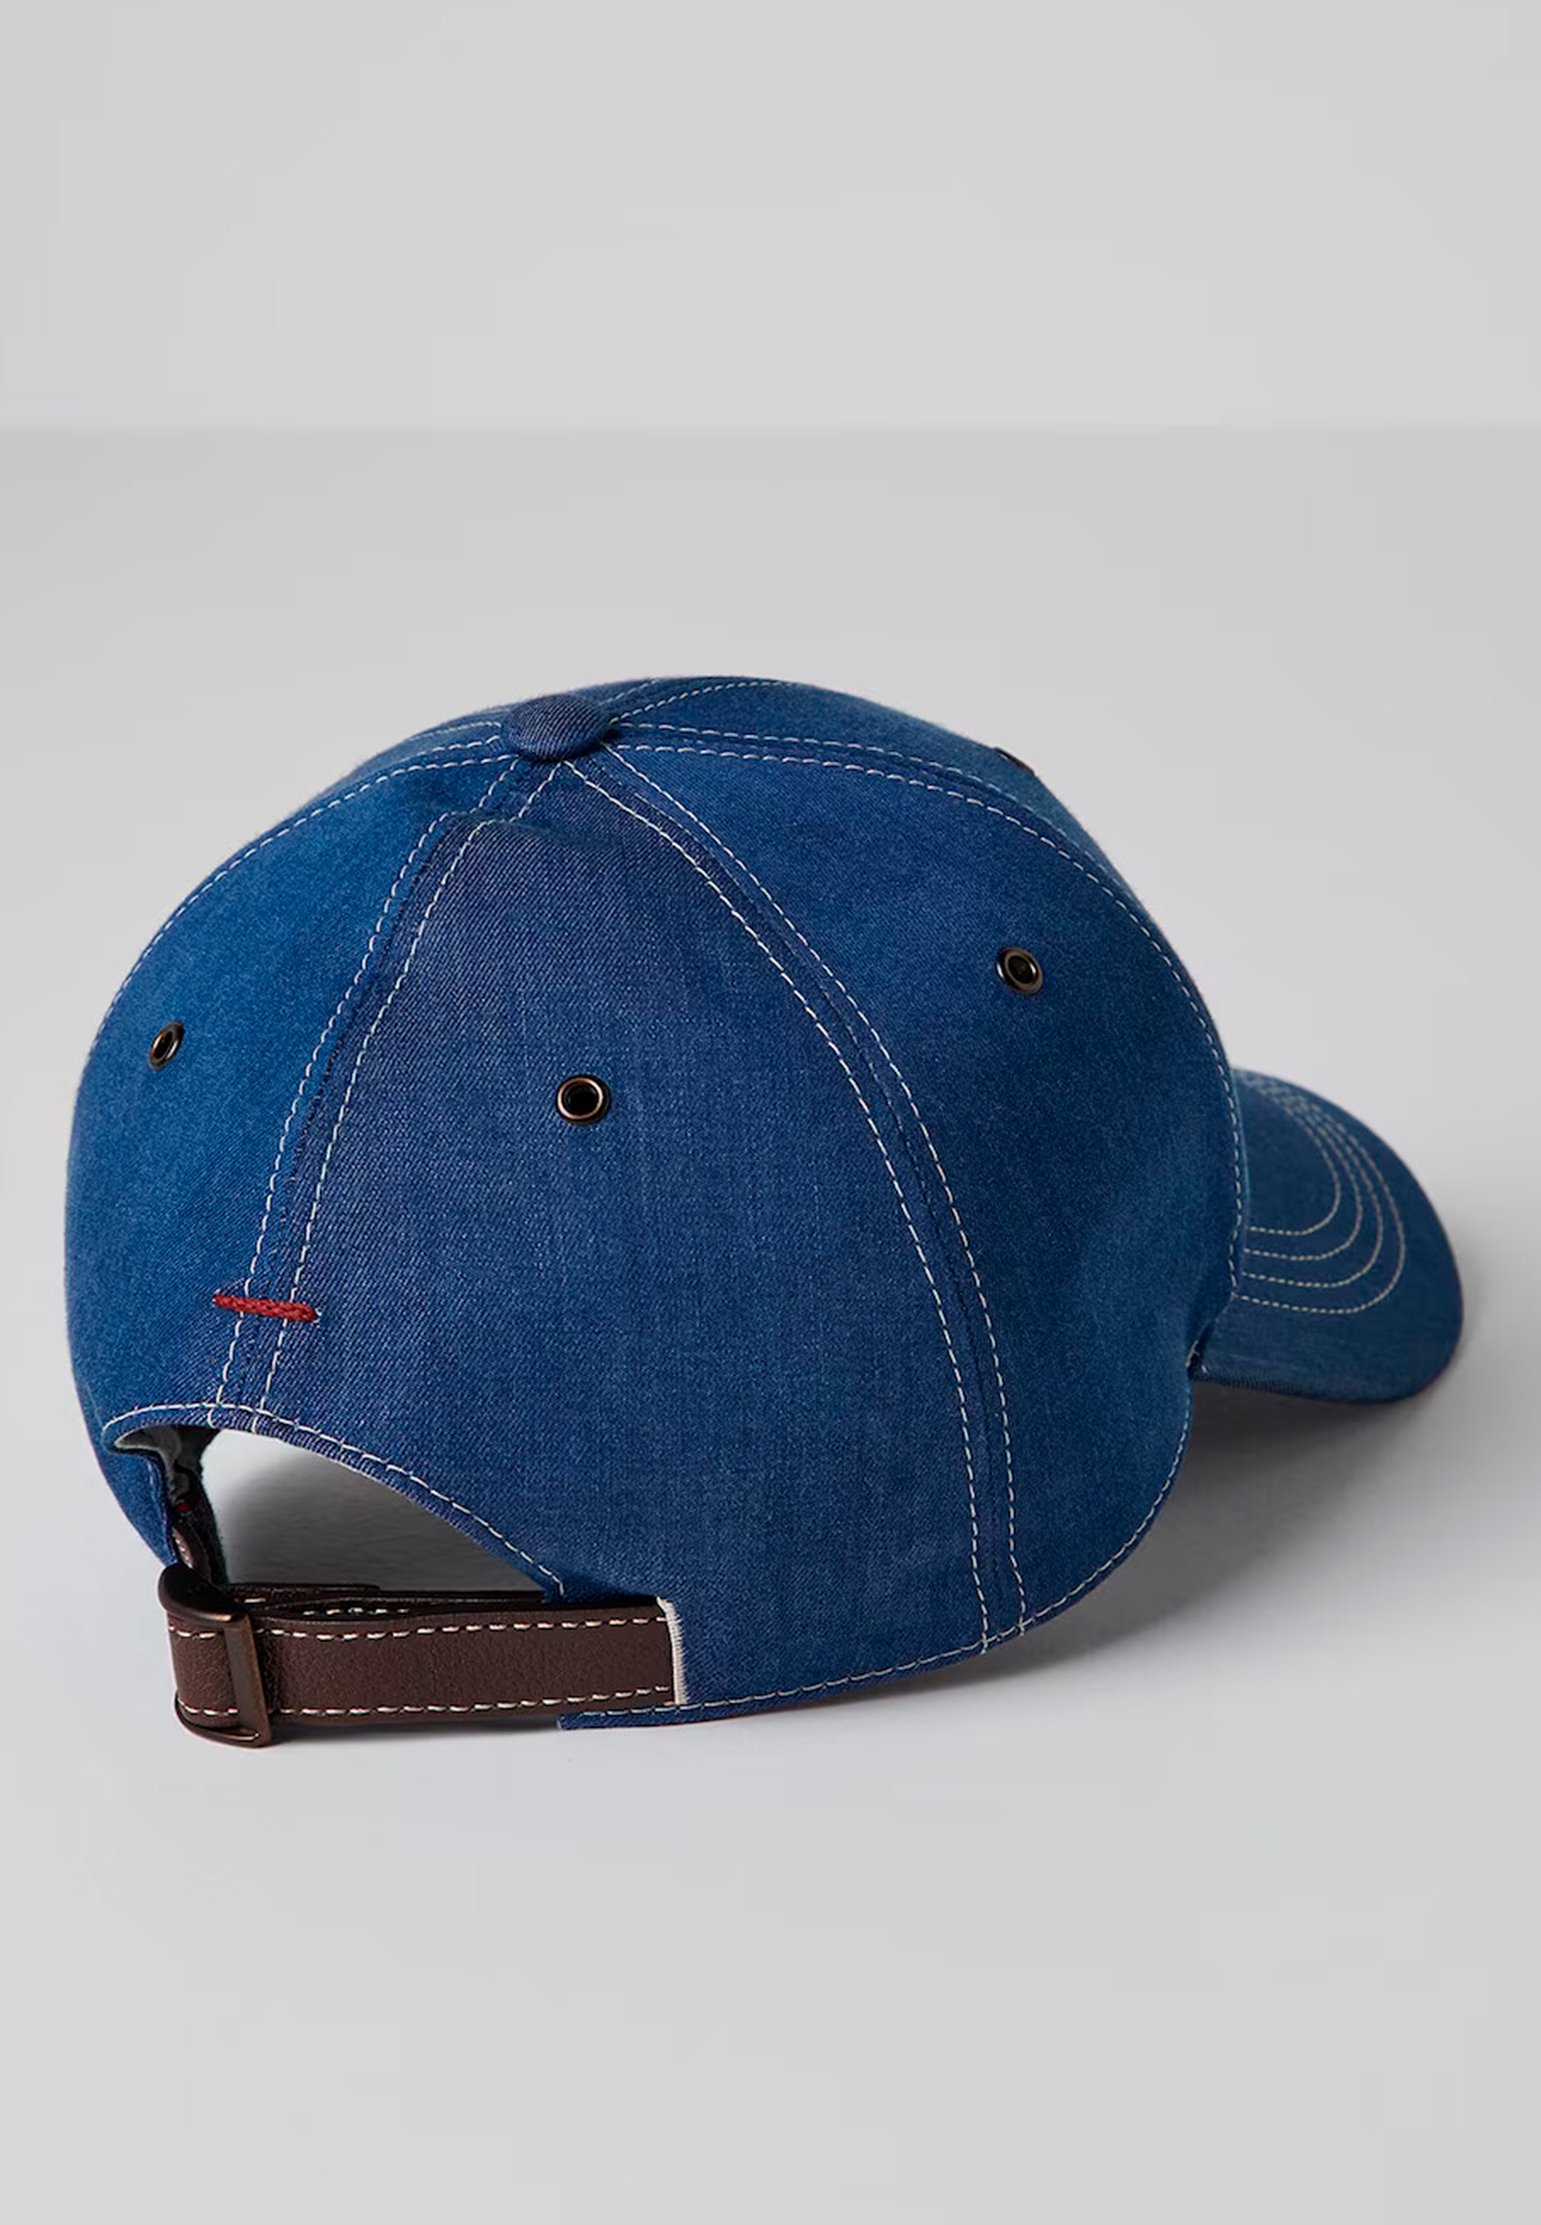 Bonnet BRUNELLO CUCINELLI Color: blue (Code: 1843) in online store Allure